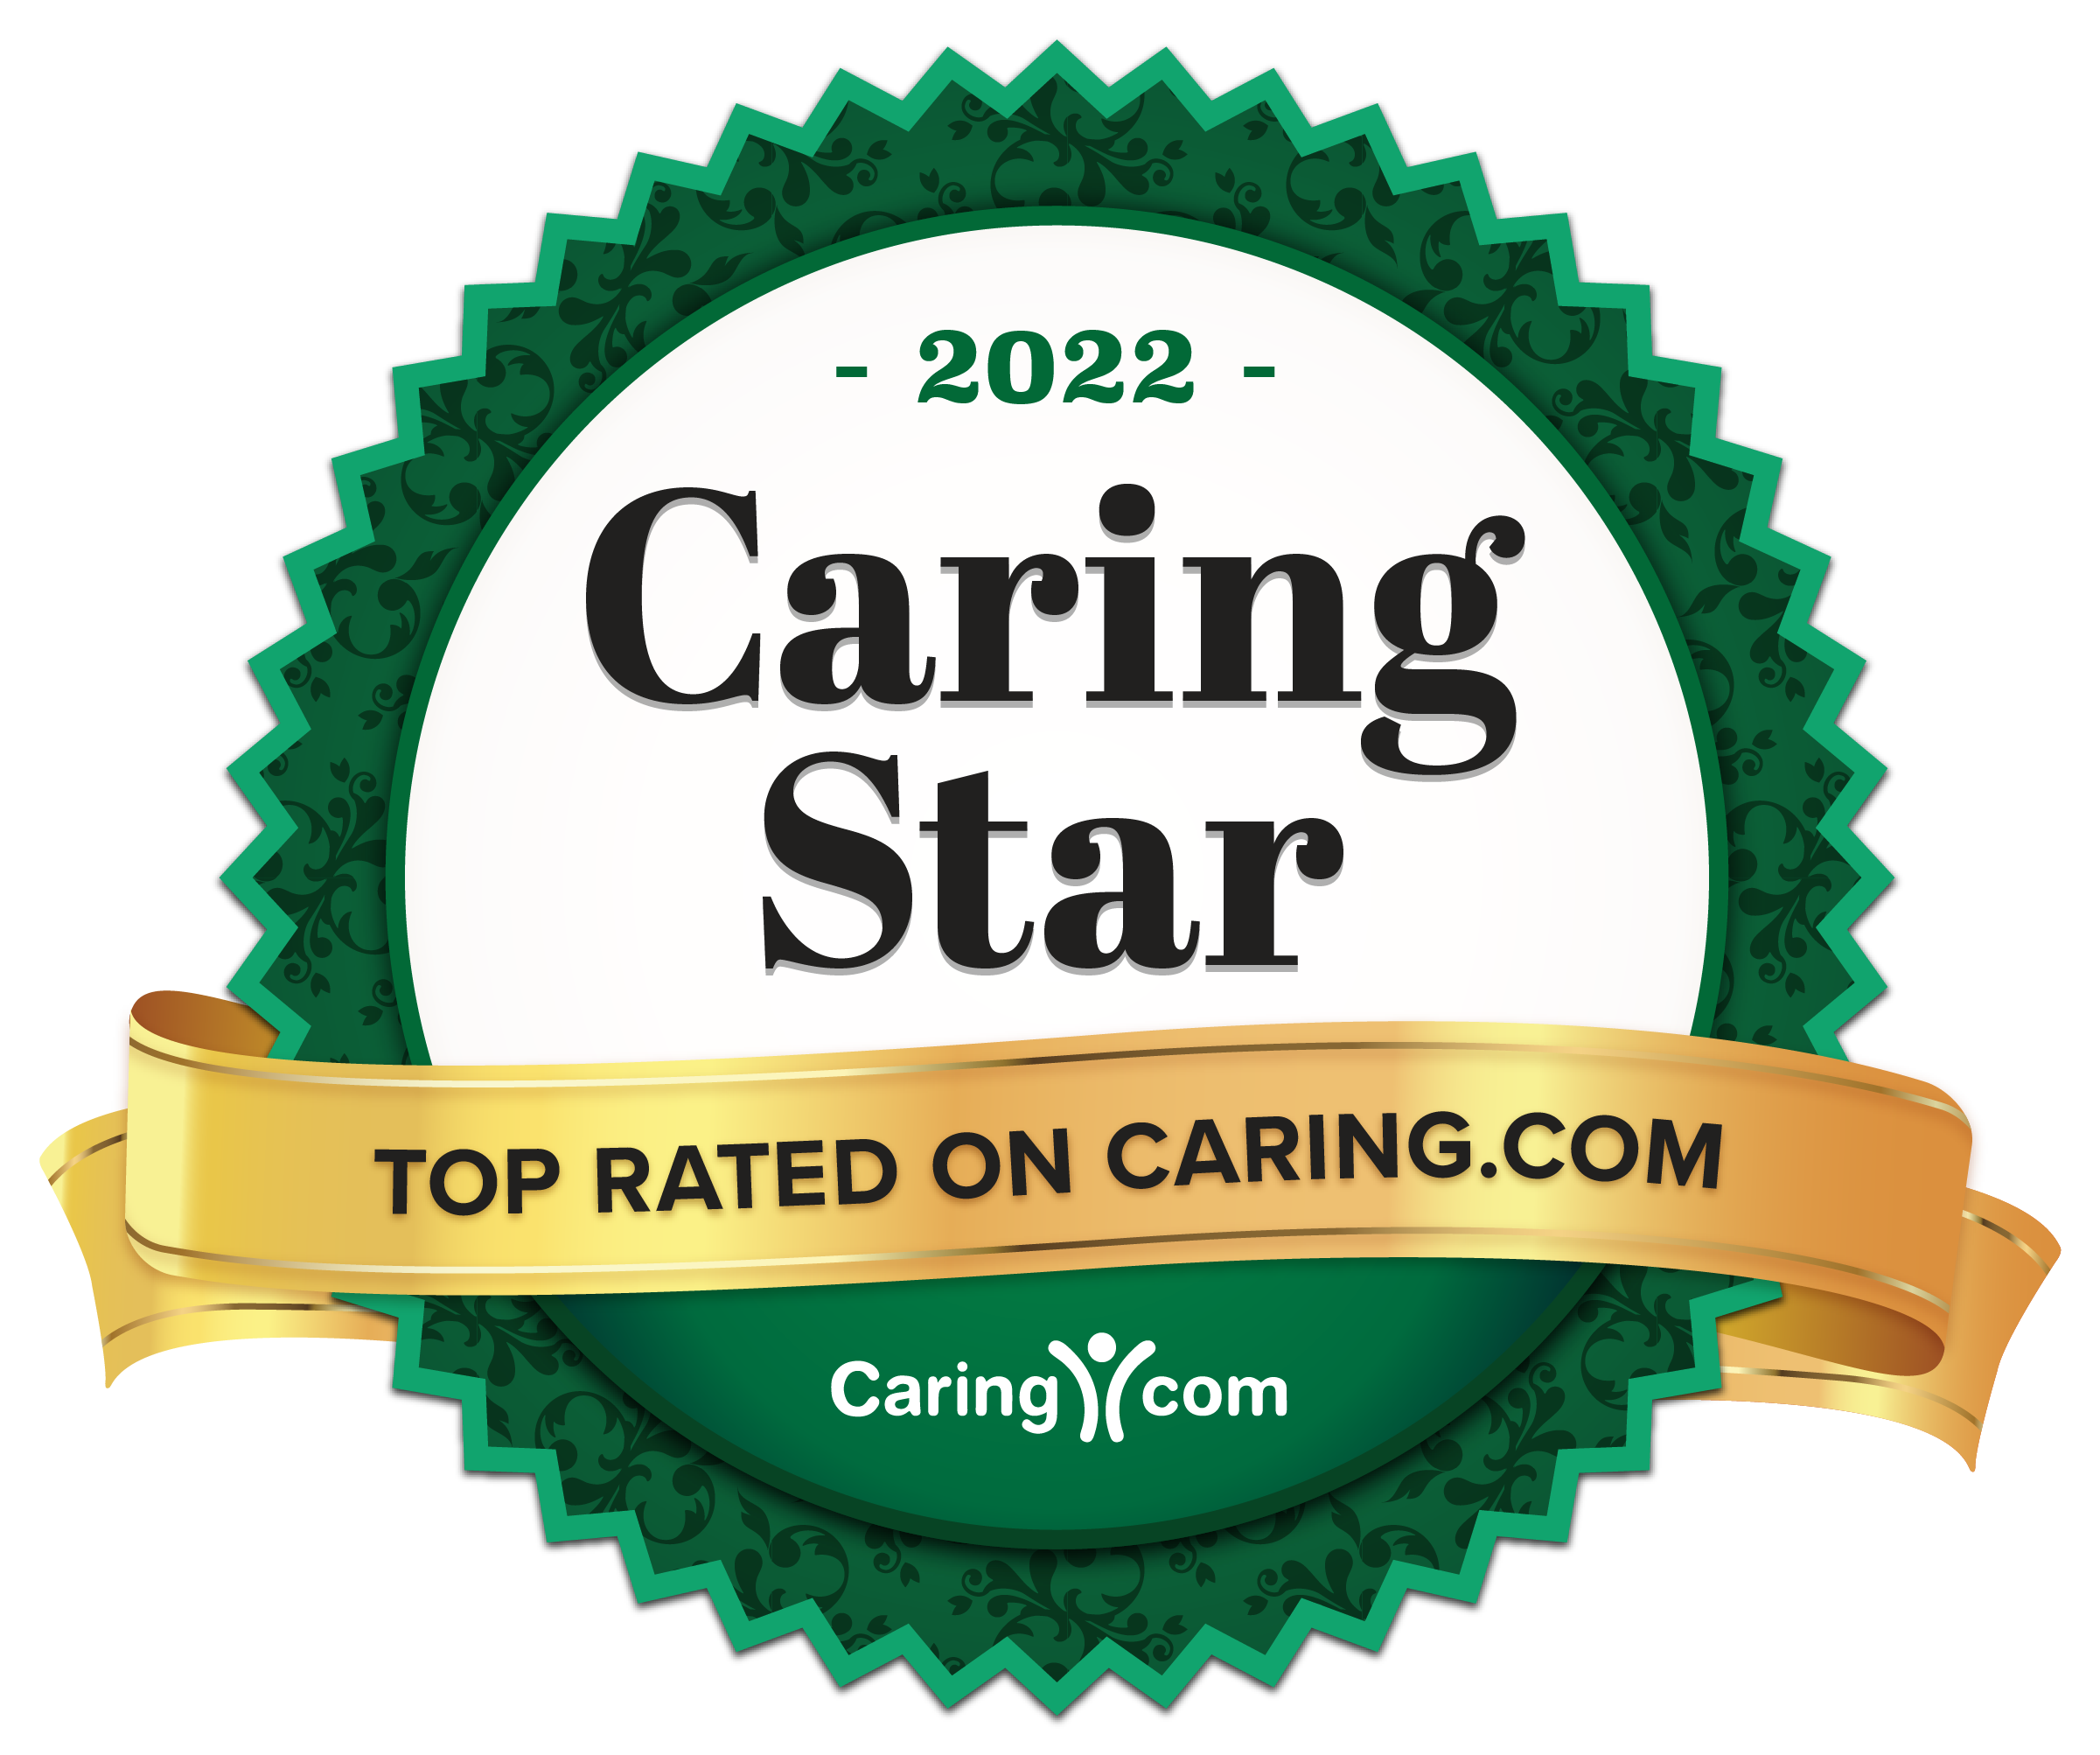 caring.com super star 2022 award logo 